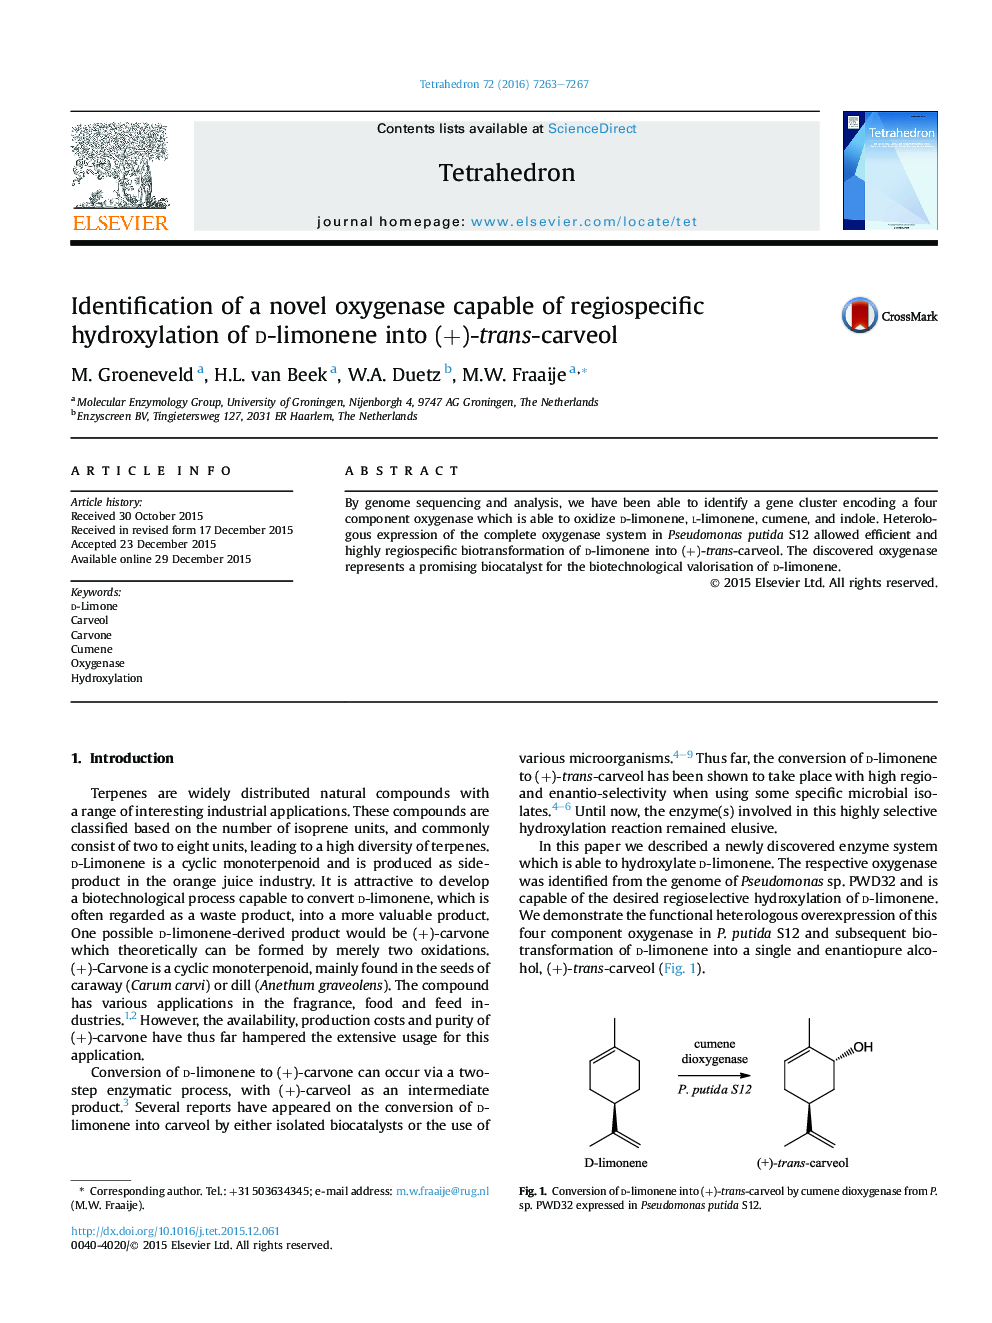 Identification of a novel oxygenase capable of regiospecific hydroxylation of d-limonene into (+)-trans-carveol